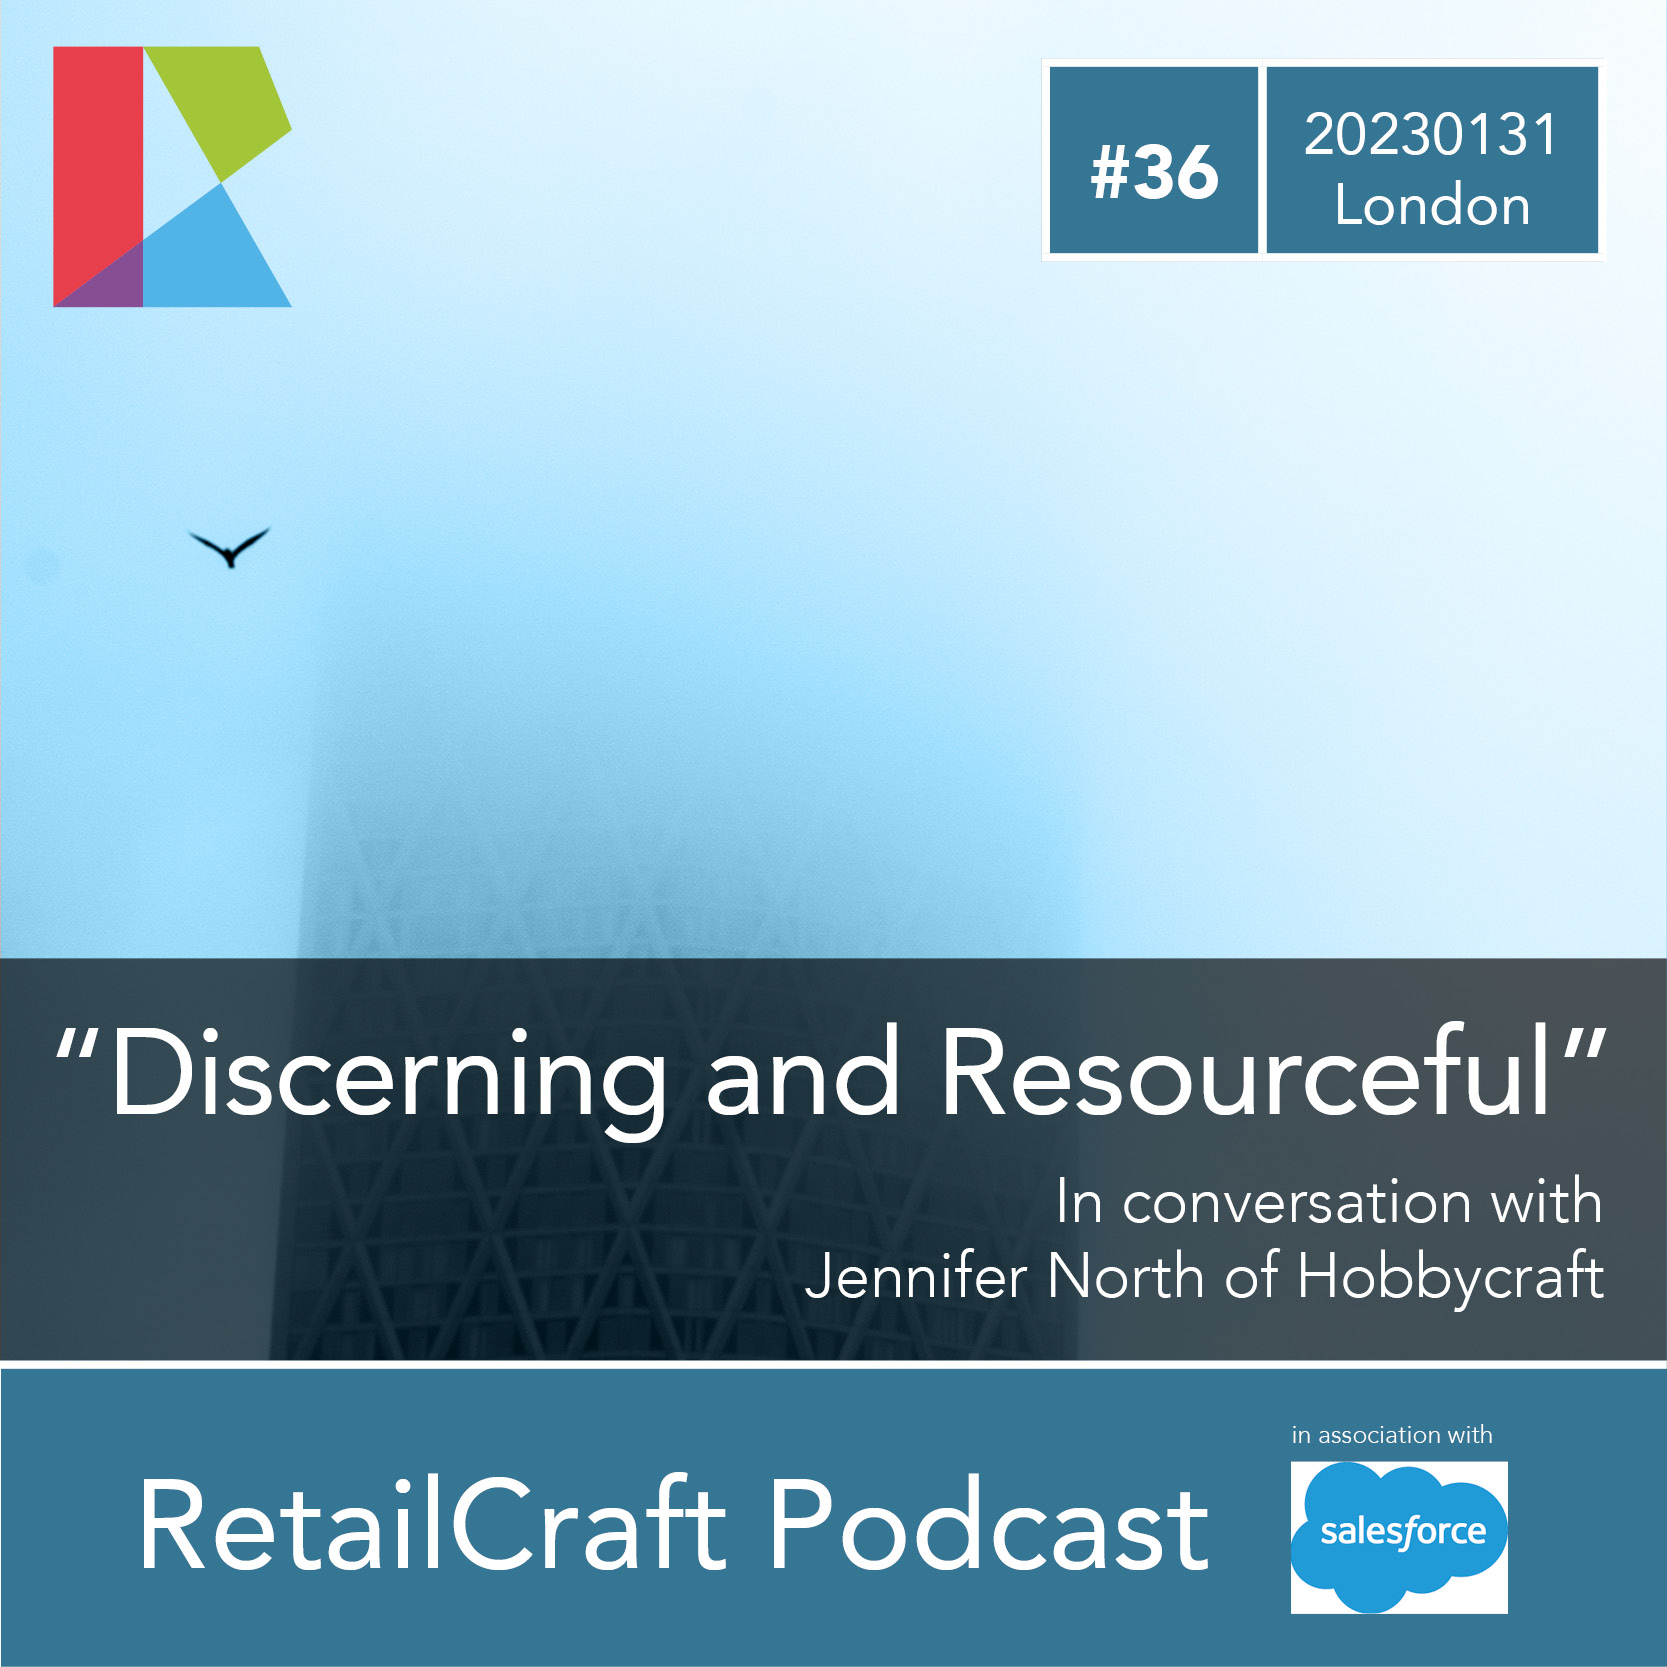 RetailCraft Podcast #36 – ”Discerning and Resourceful” – Jennifer North of Hobbycraft